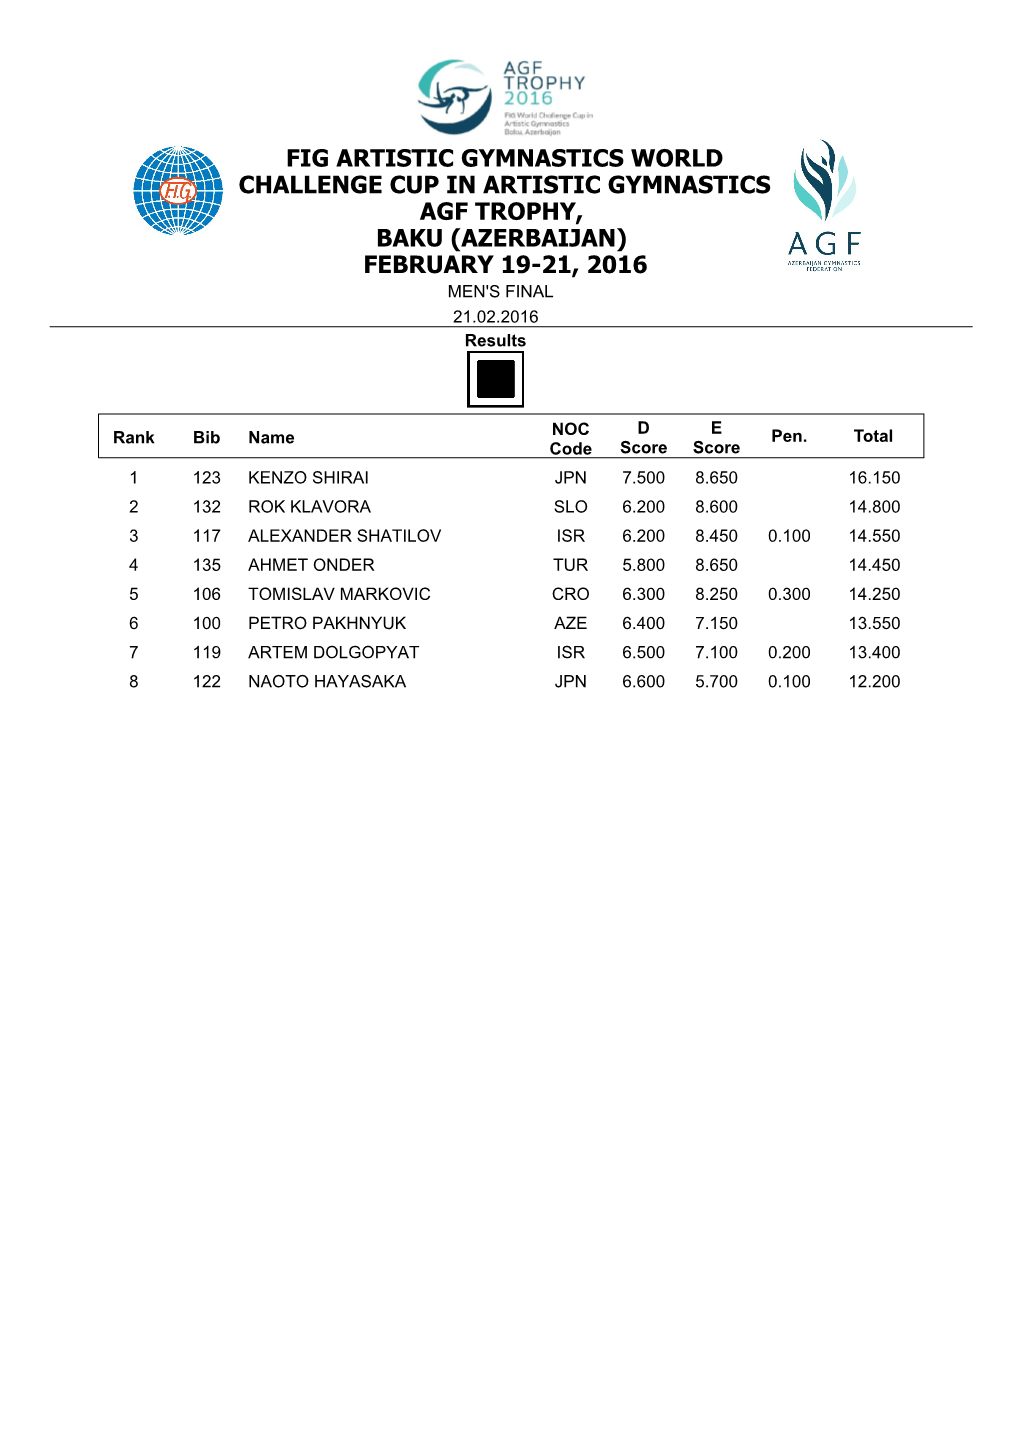 FIG ARTISTIC GYMNASTICS WORLD CHALLENGE CUP in ARTISTIC GYMNASTICS AGF TROPHY, BAKU (AZERBAIJAN) FEBRUARY 19-21, 2016 MEN's FINAL 21.02.2016 Results